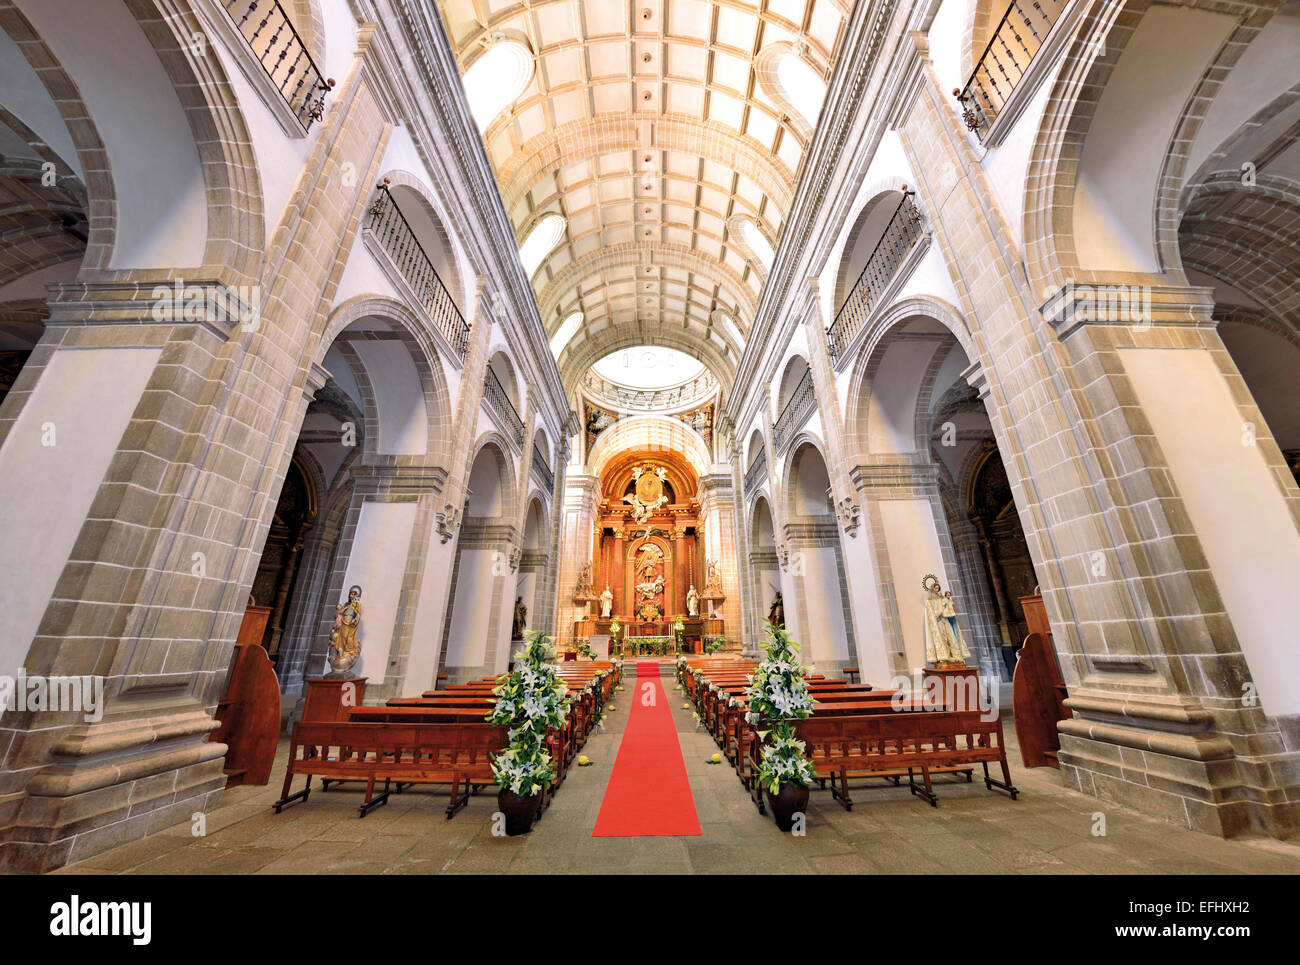 L'Espagne, la Galice : vue intérieure de la basilique de l'abbaye de La Ribera Samos Banque D'Images